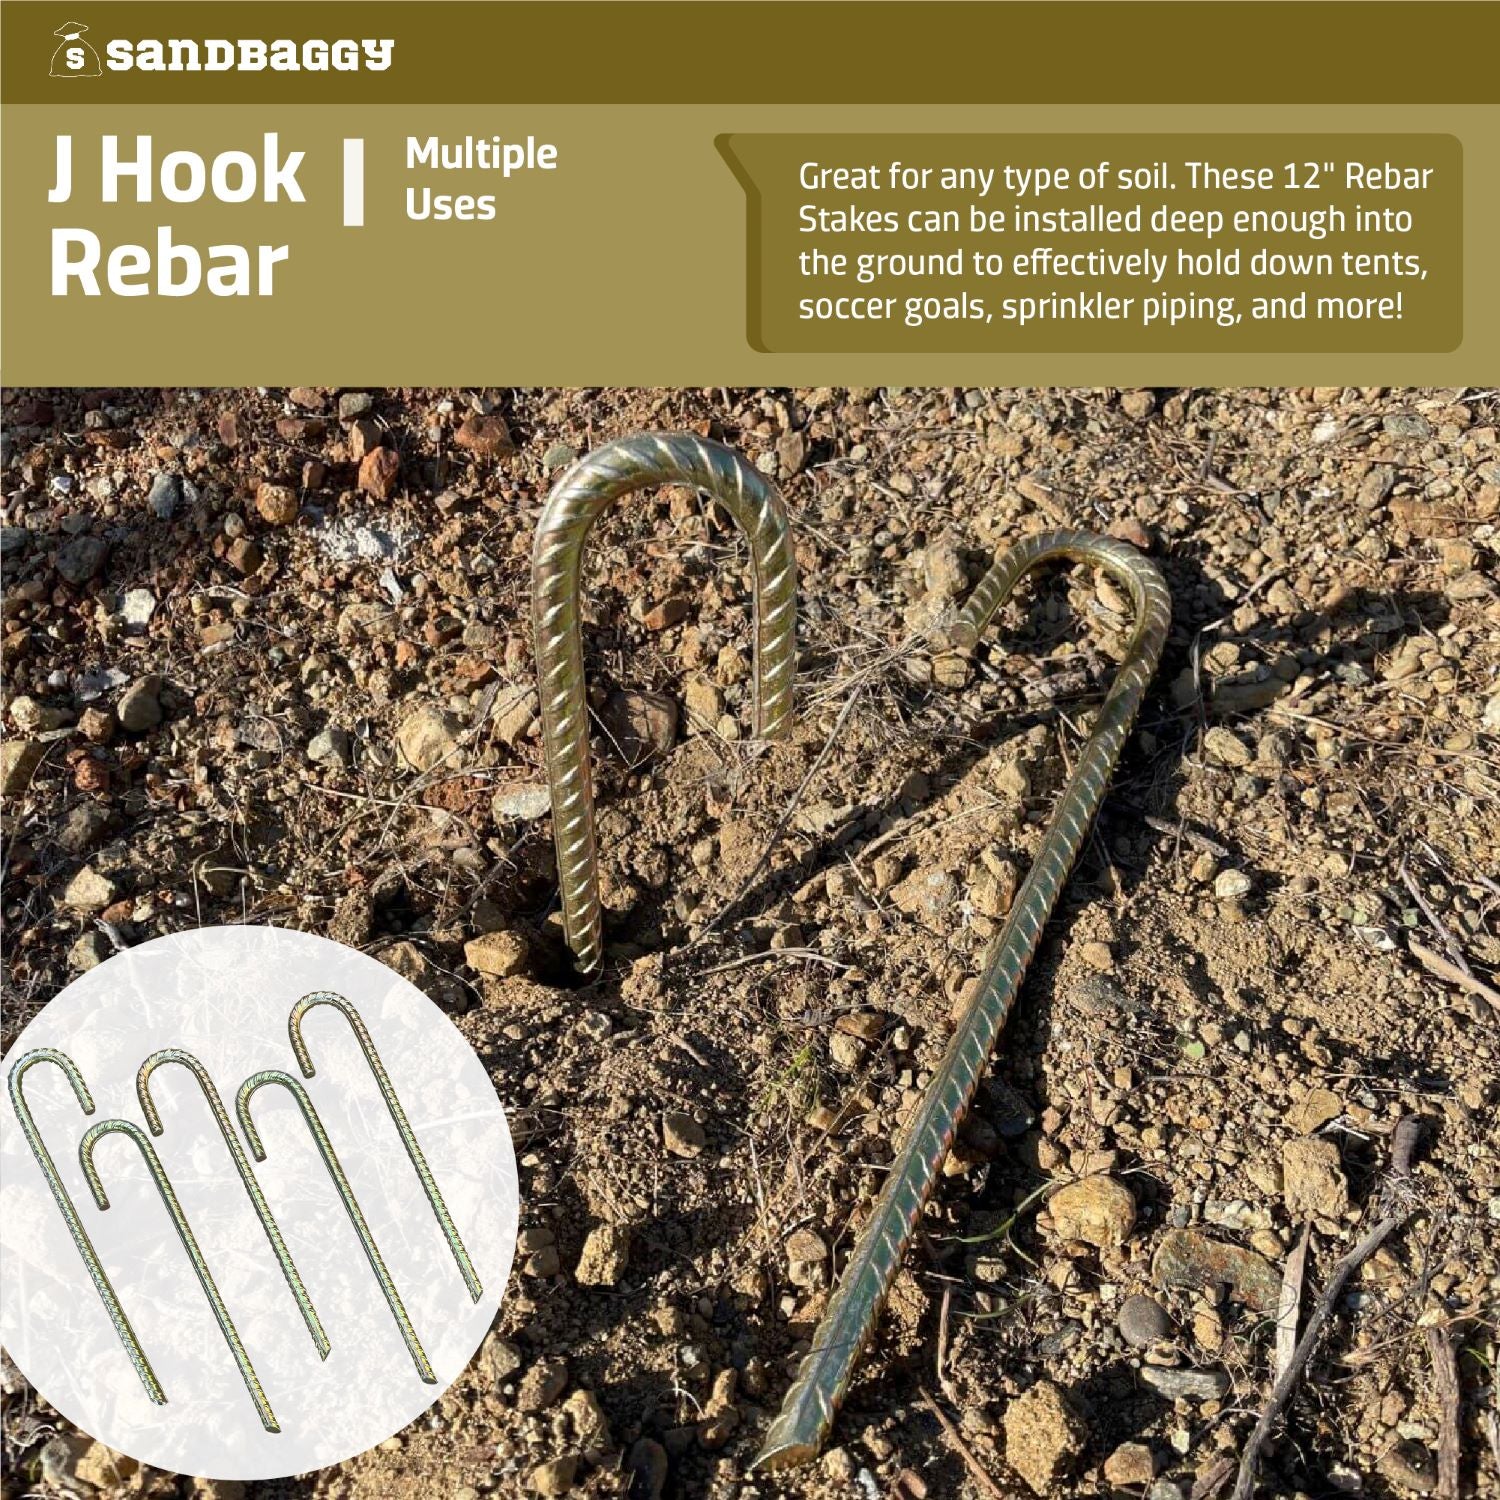 J Hook Rebar Stakes - Galvanized Steel #3 Rebar - Sandbaggy